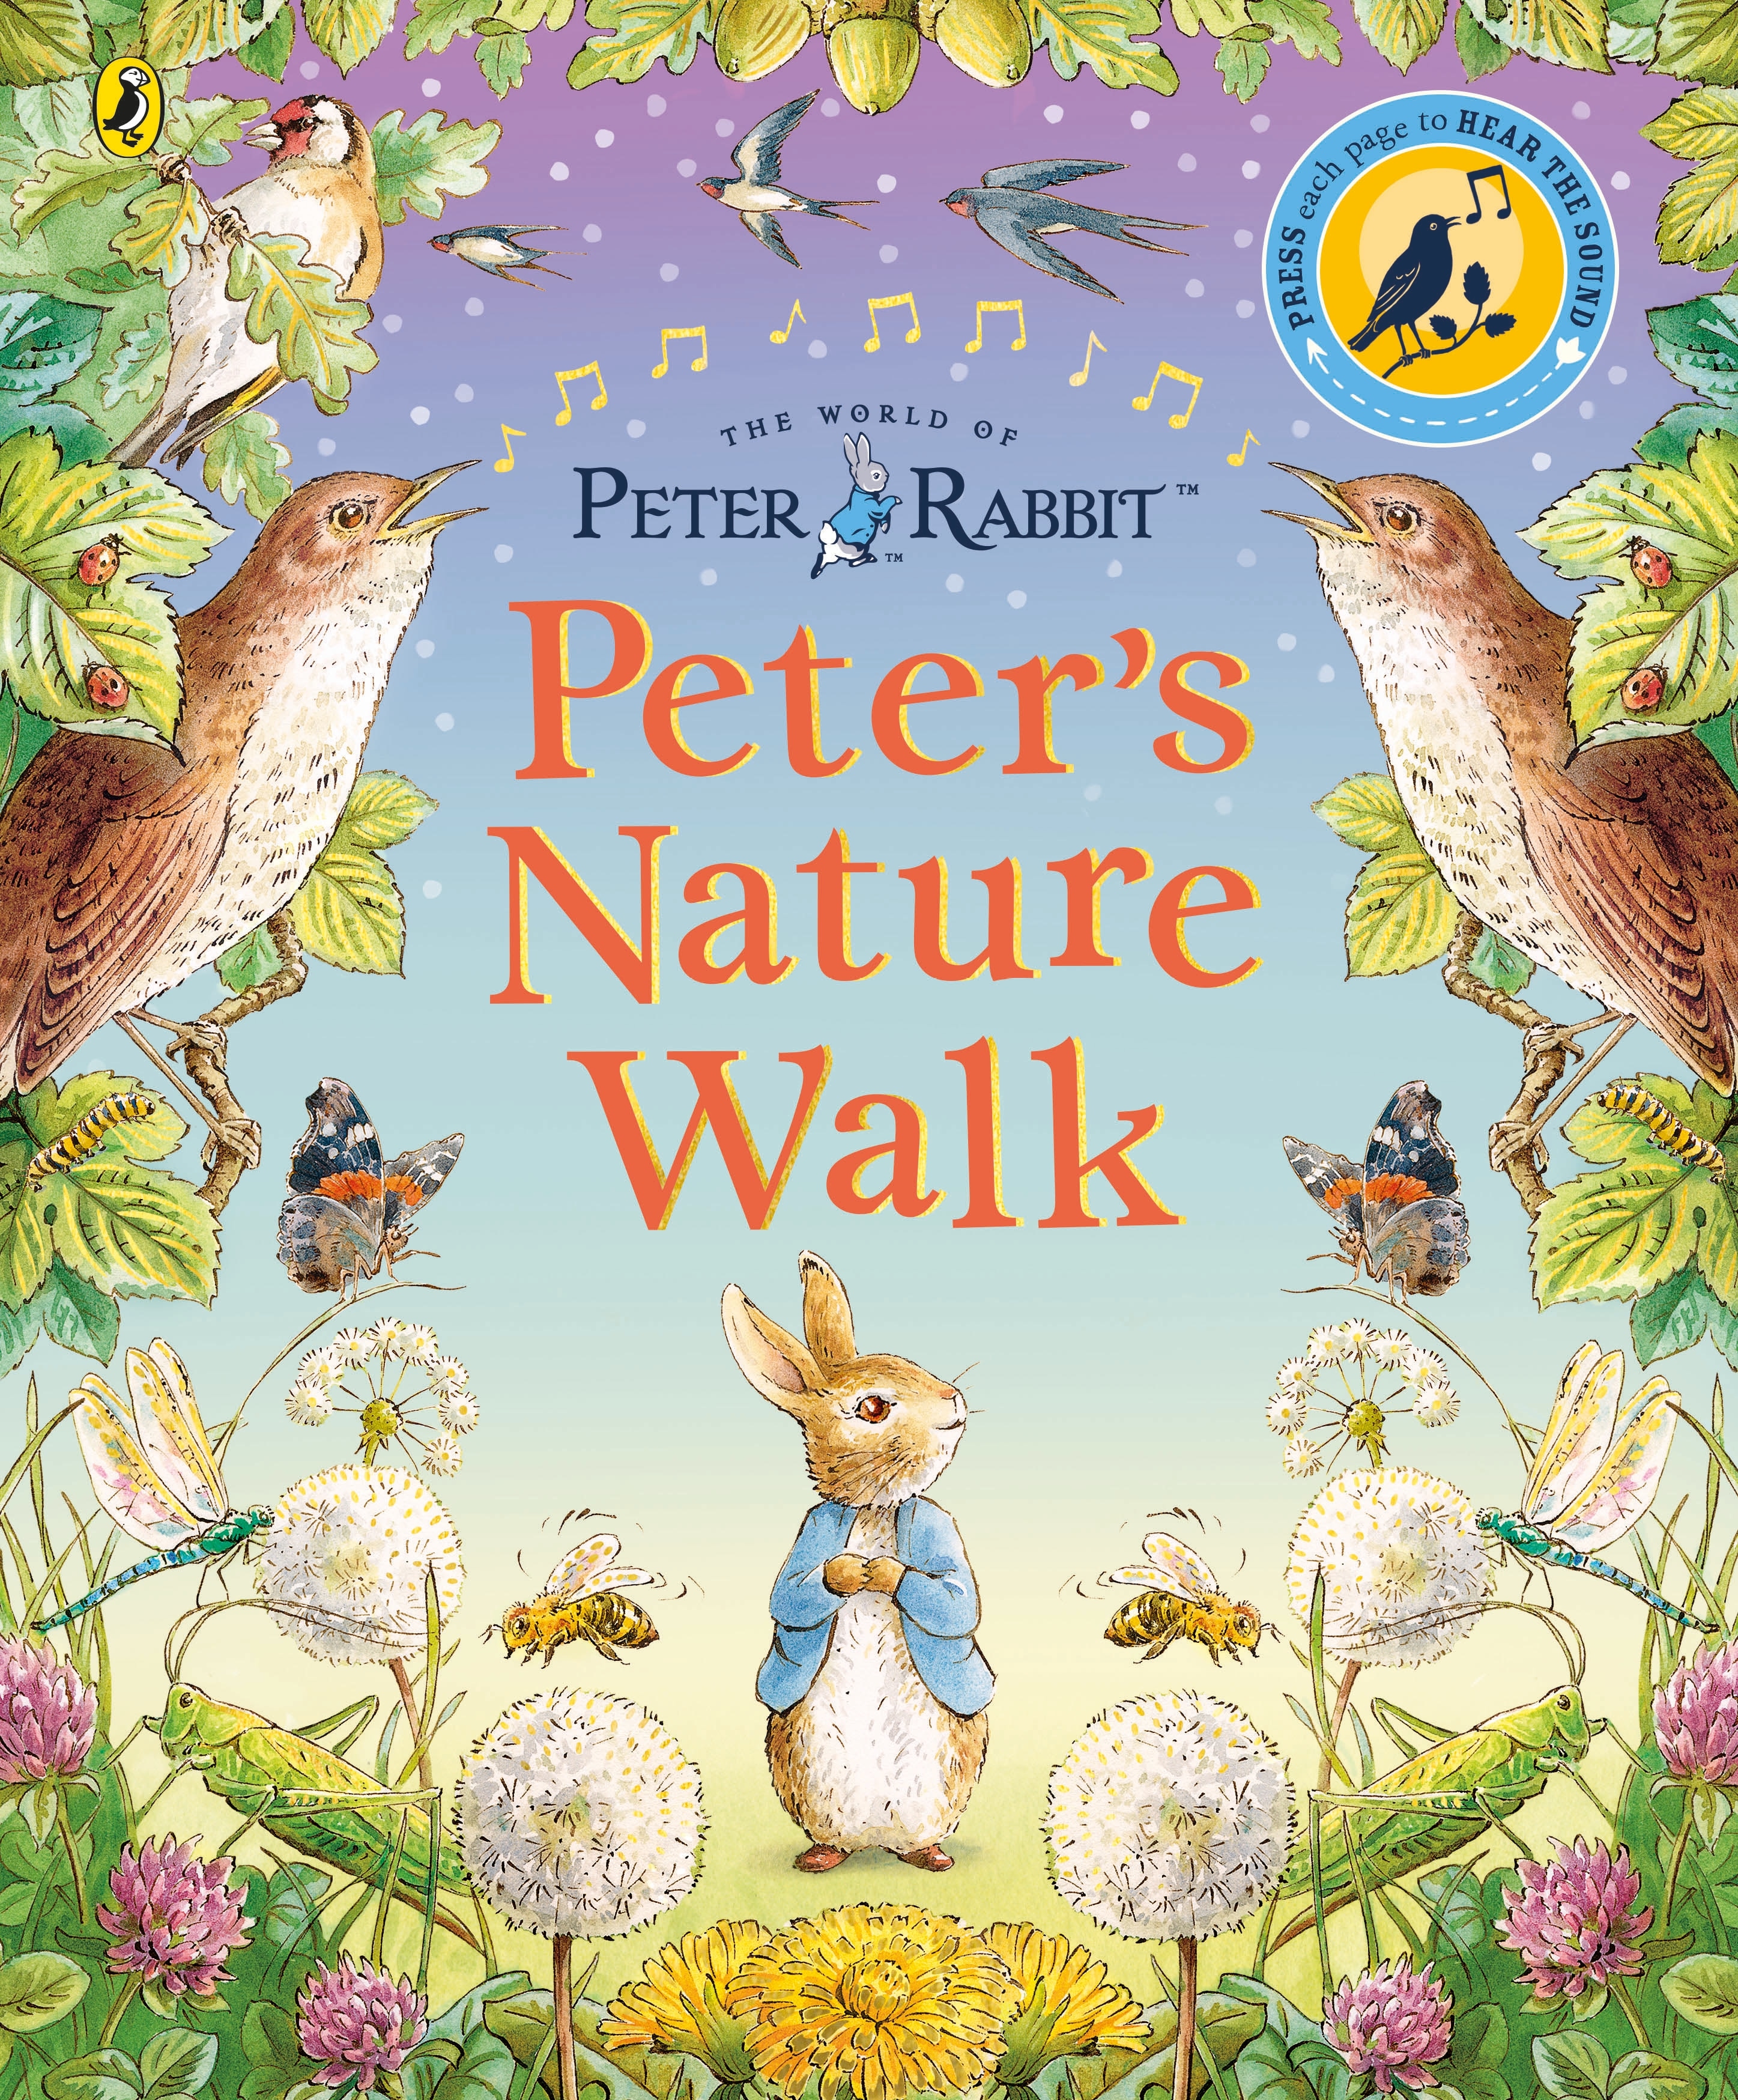 Book “Peter Rabbit: Peter's Nature Walk” by Beatrix Potter — September 1, 2022